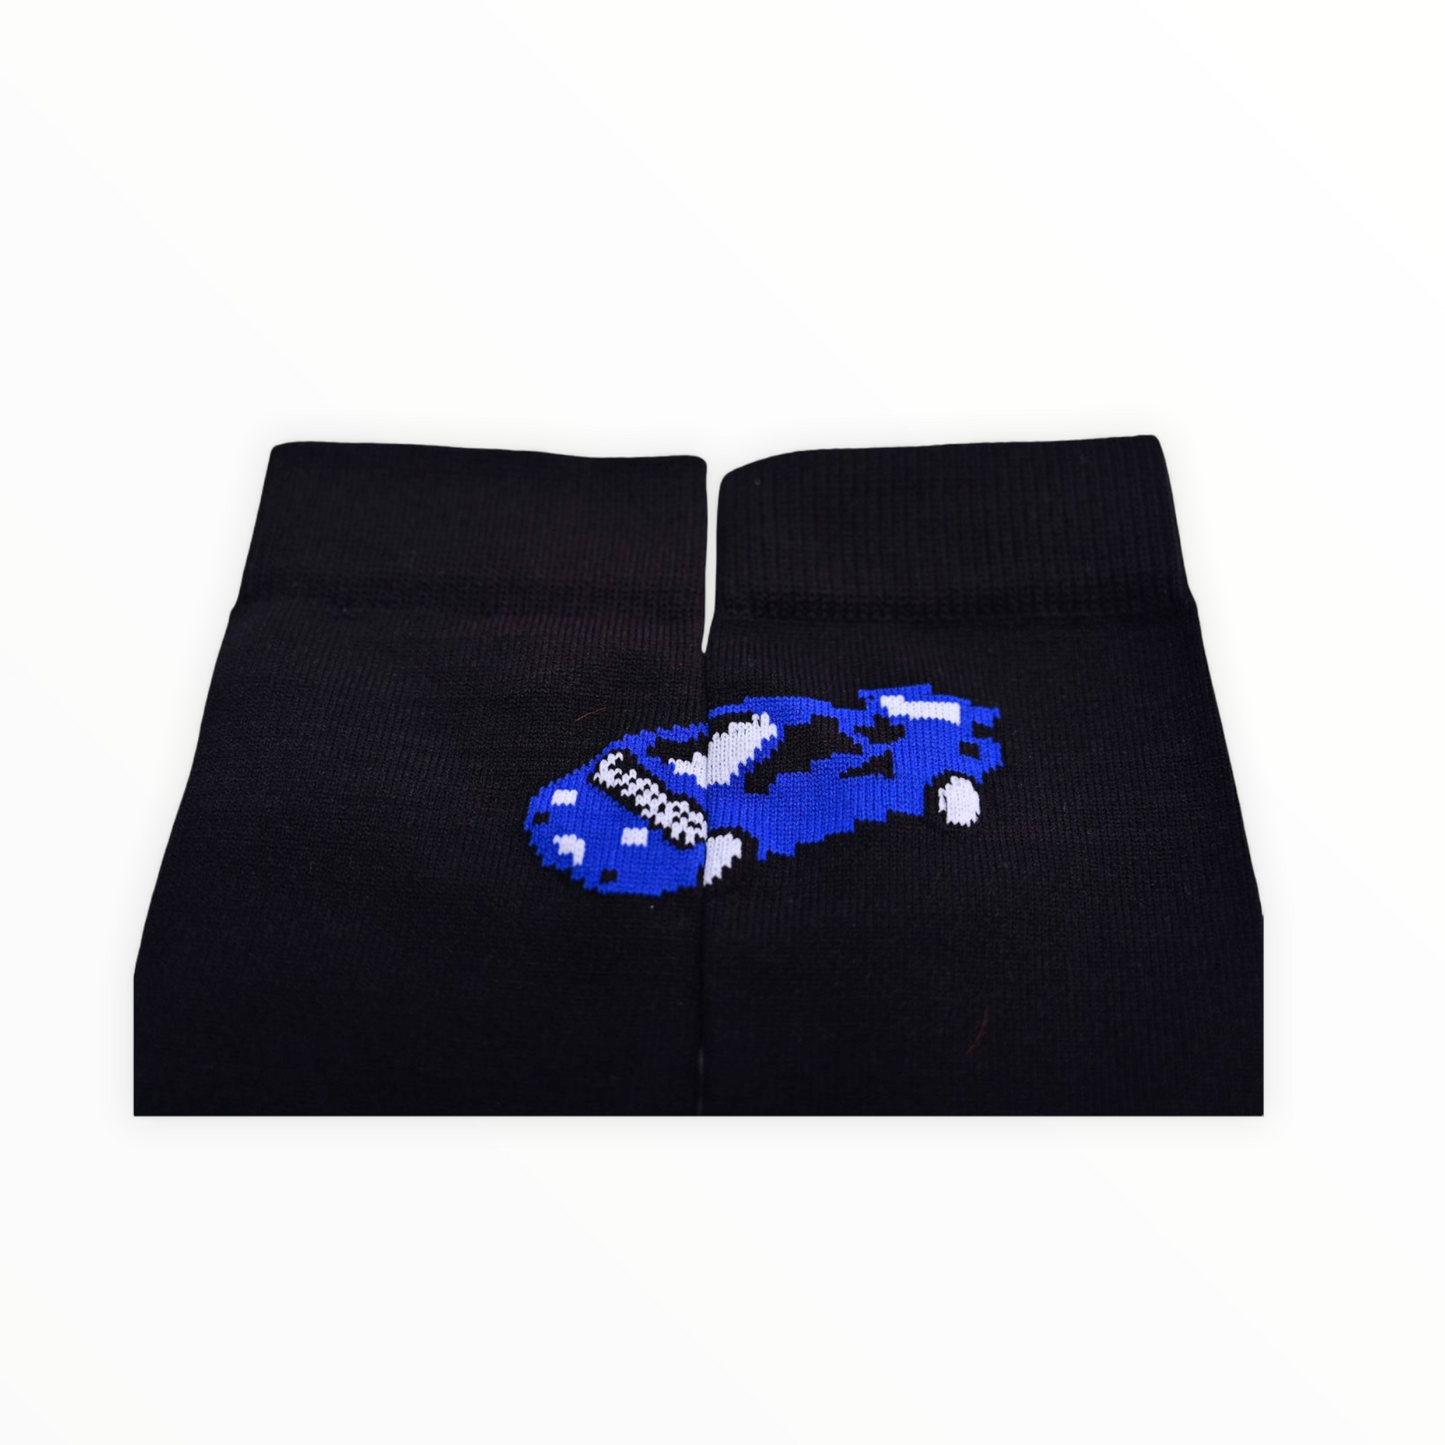 Winners Car Logo Socks - Black/Blue